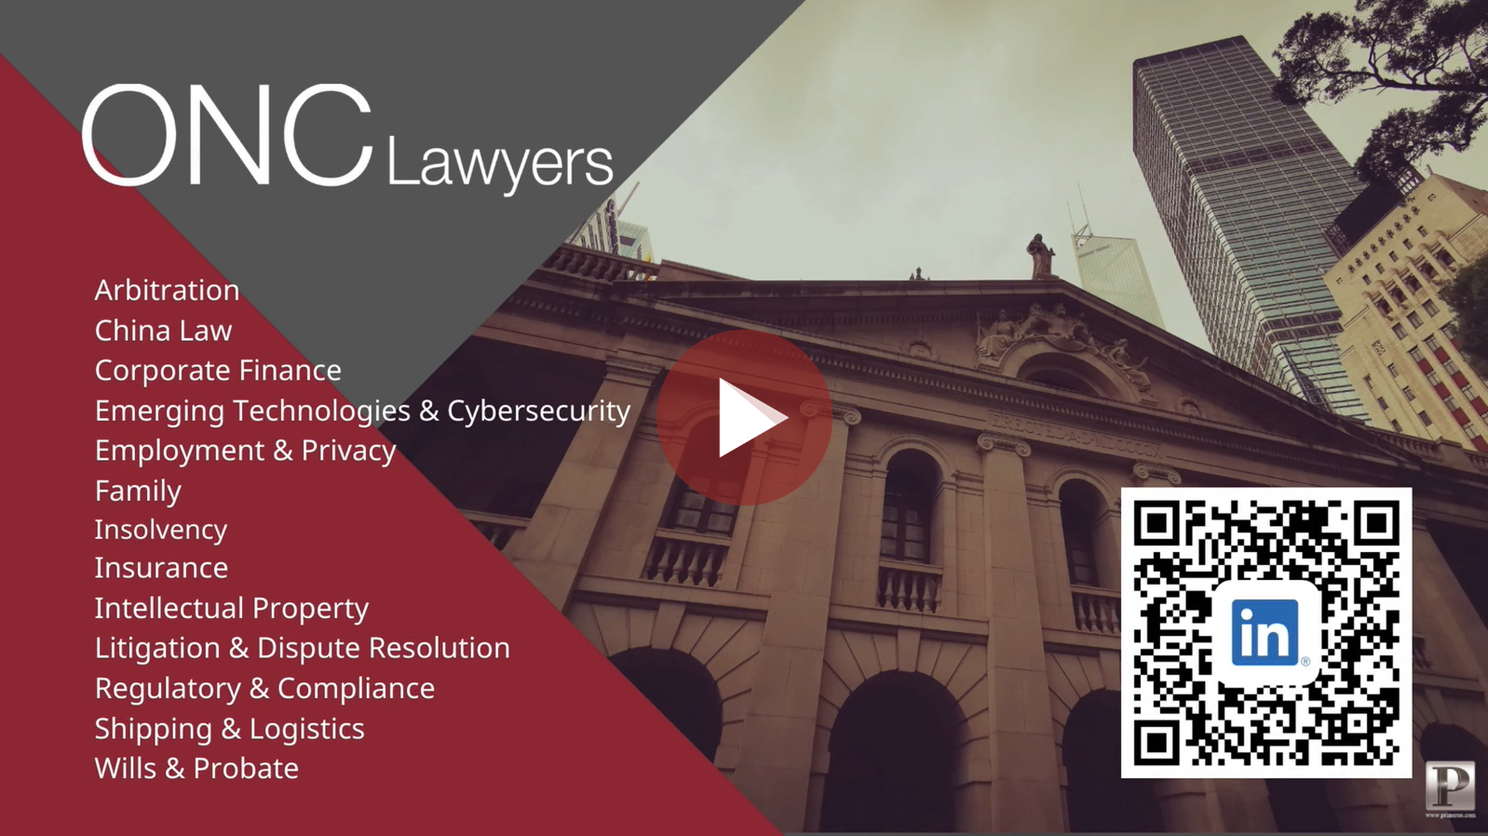 ONC 柯伍陳律師事務所簡介短片在 Primerus 的 2021 年全球企業法律顧問協會虛擬年會特設平台播放